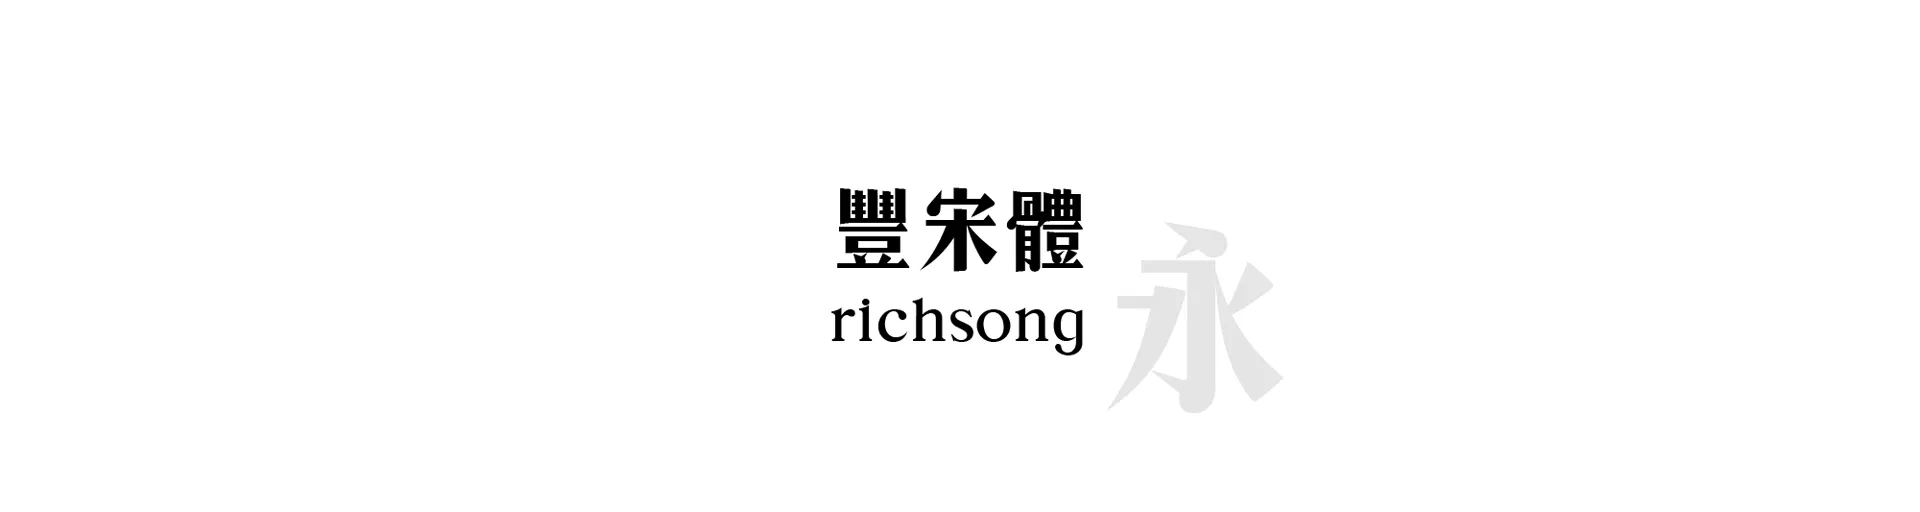 richsong